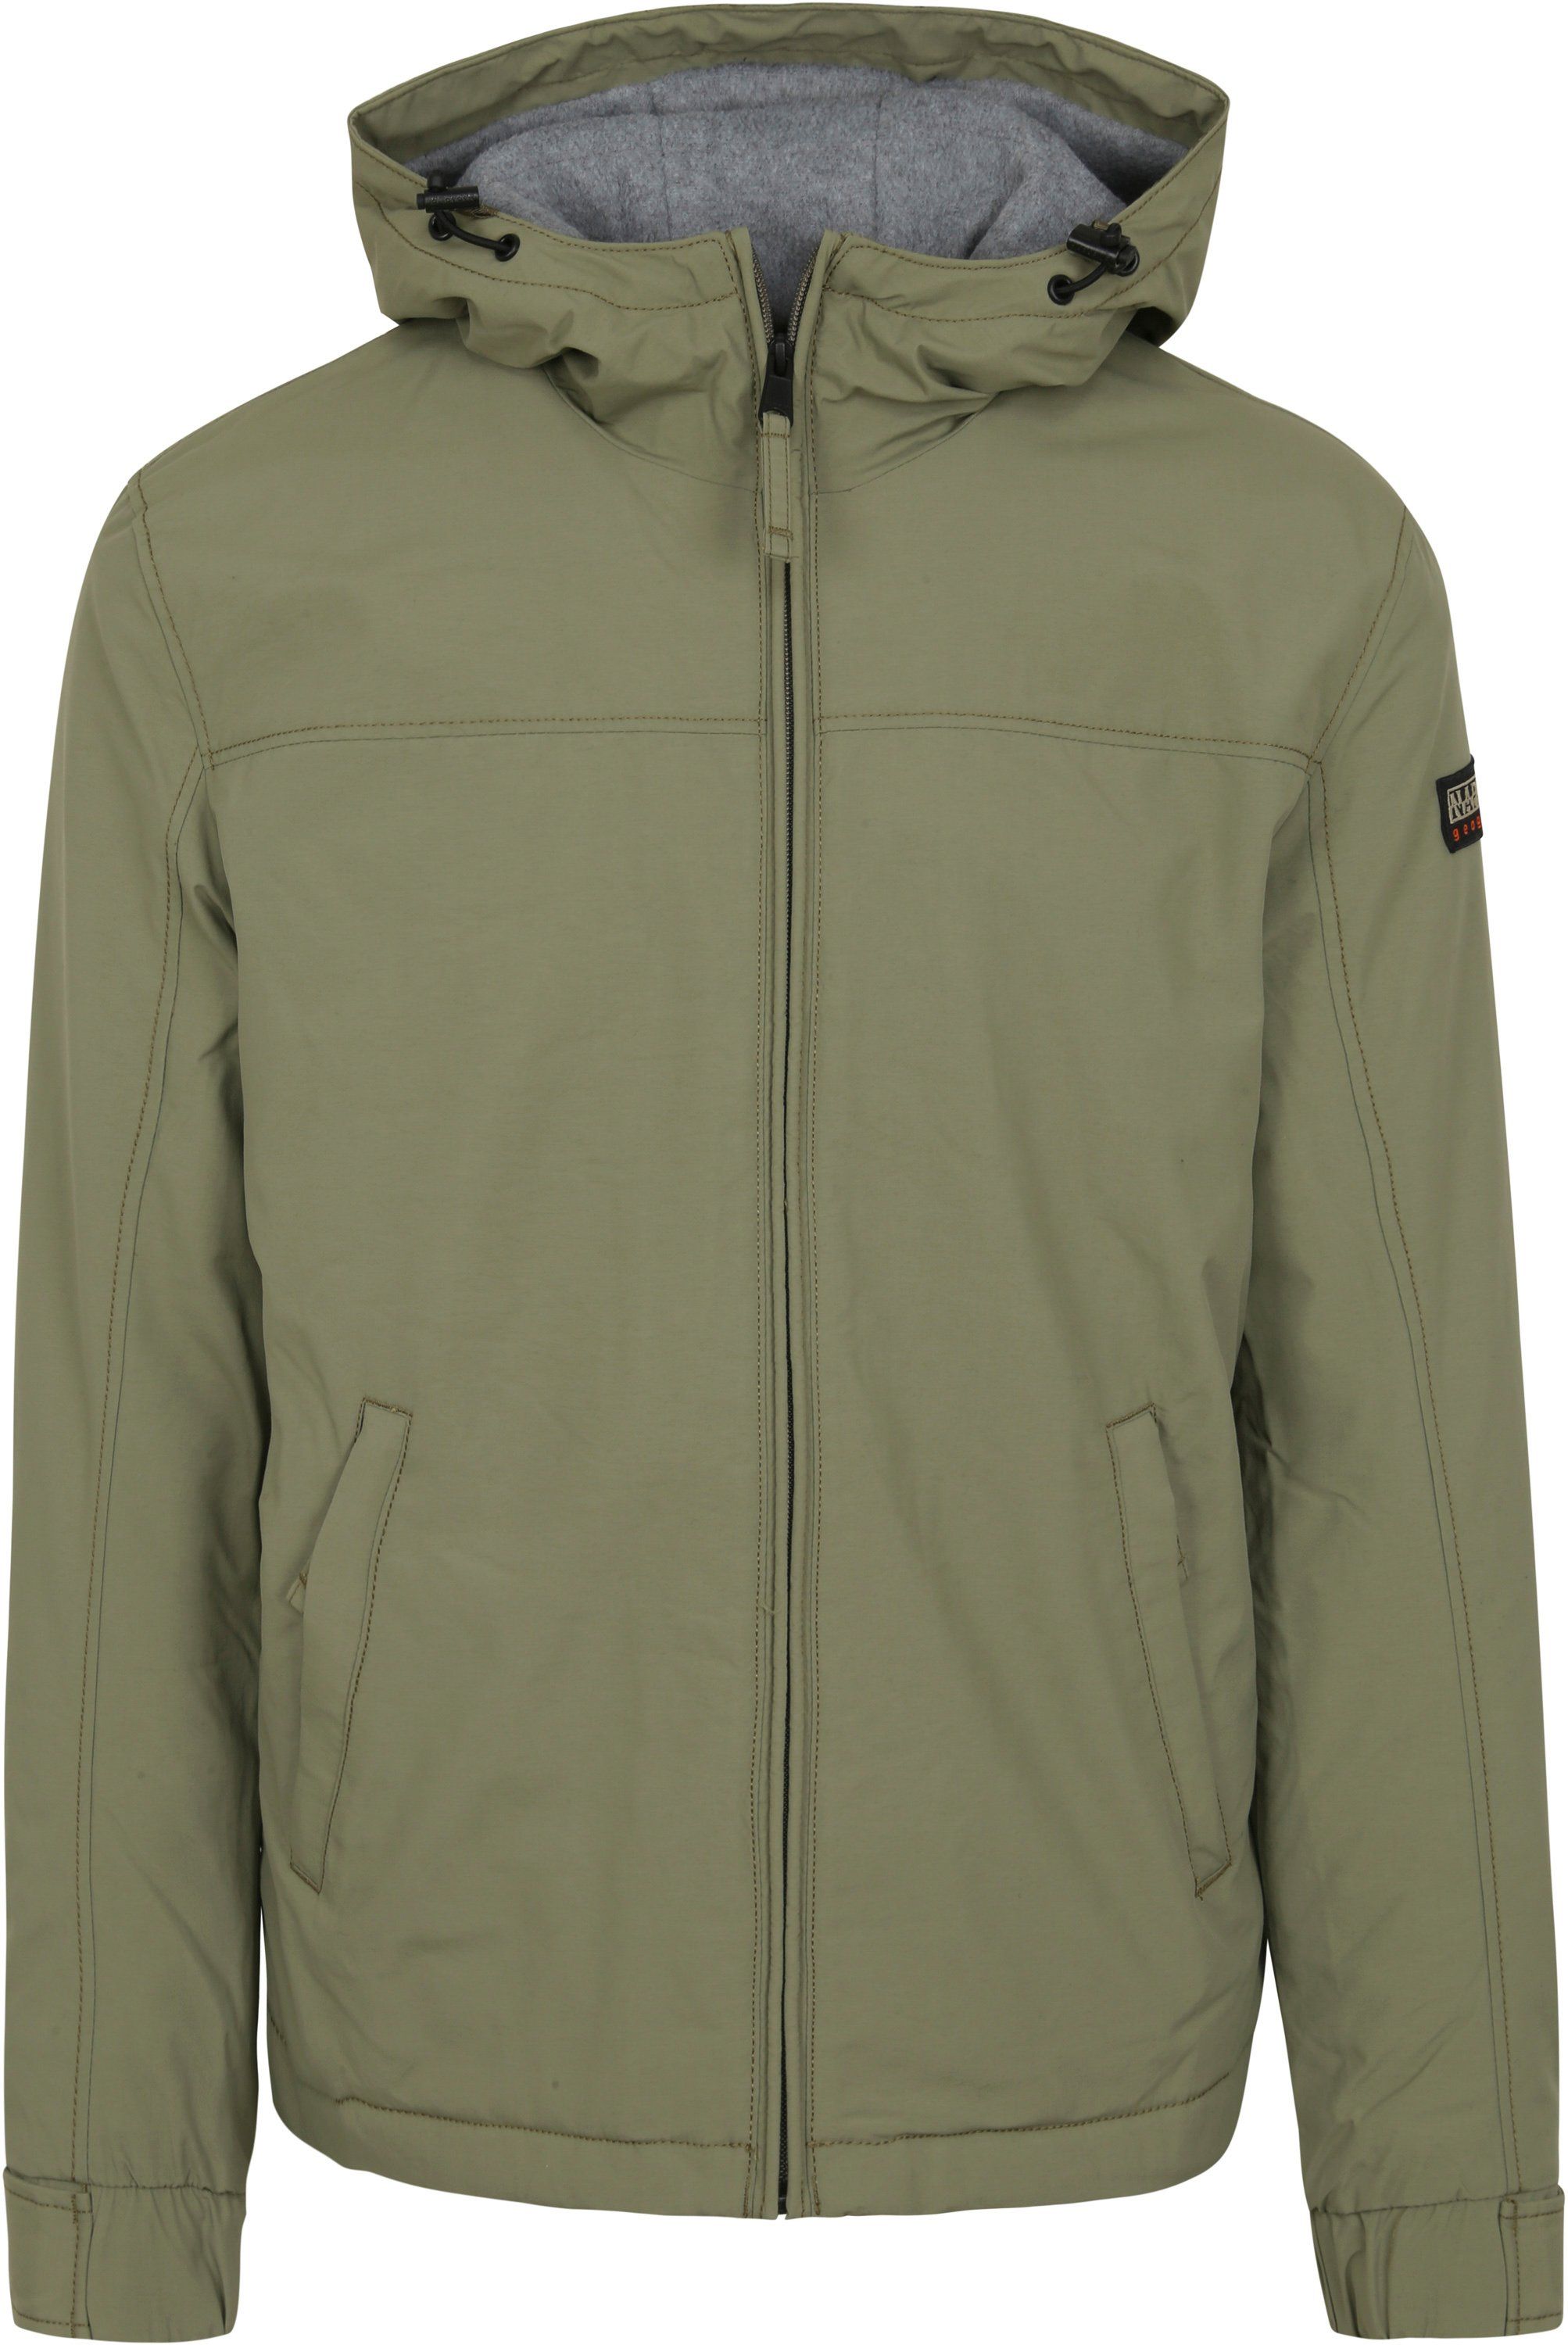 Napapijri Jacket Shelter Green size L